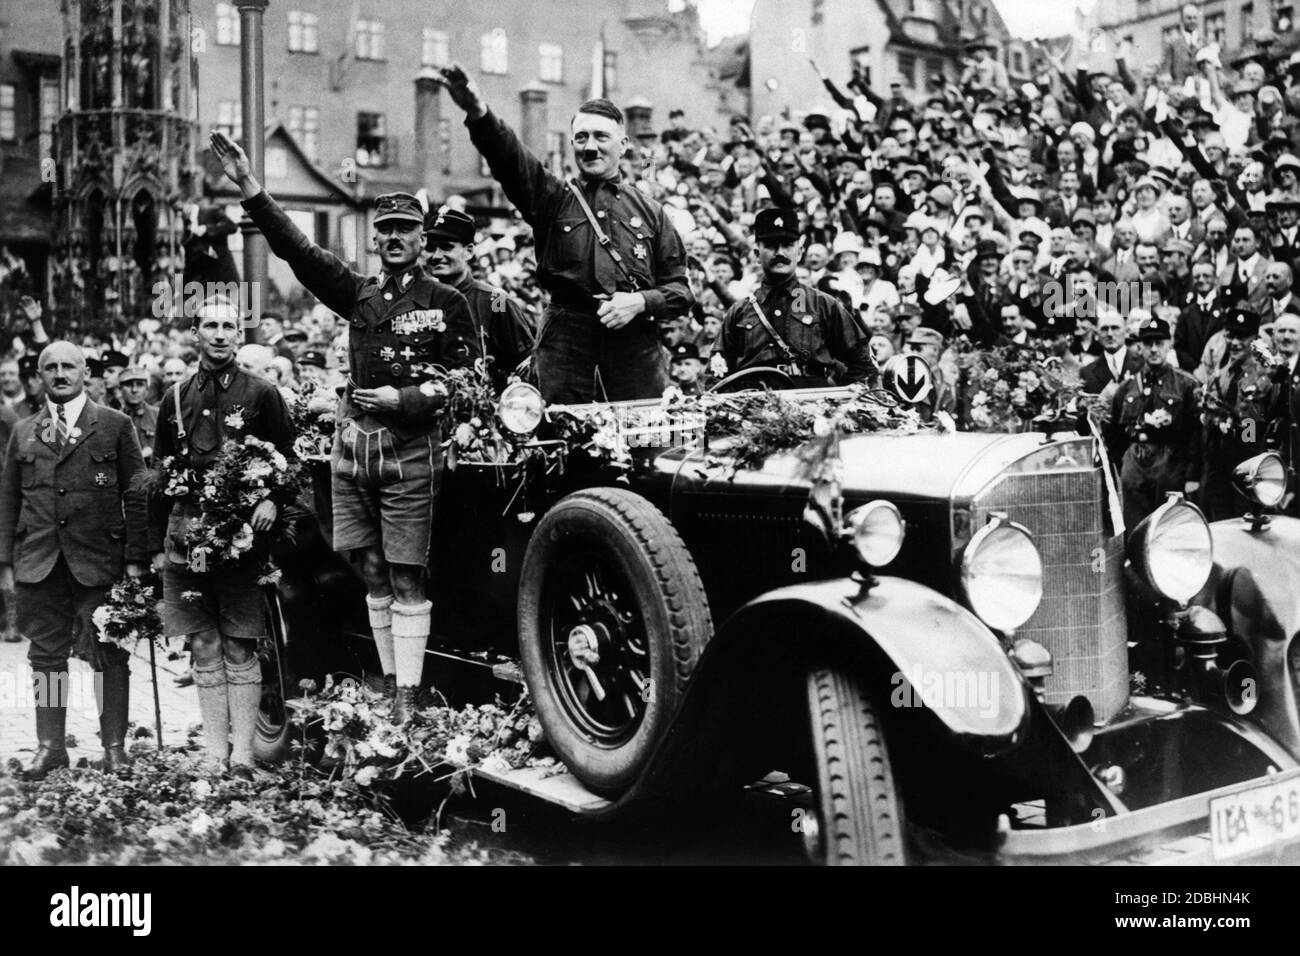 On Nuremberg's main market square, from left to right Julius Streicher, Franz Pfeffer von Salomon, Rudolf Hess, Adolf Hitler and Ulrich Graf greet guests with the Nazi salute. Stock Photo